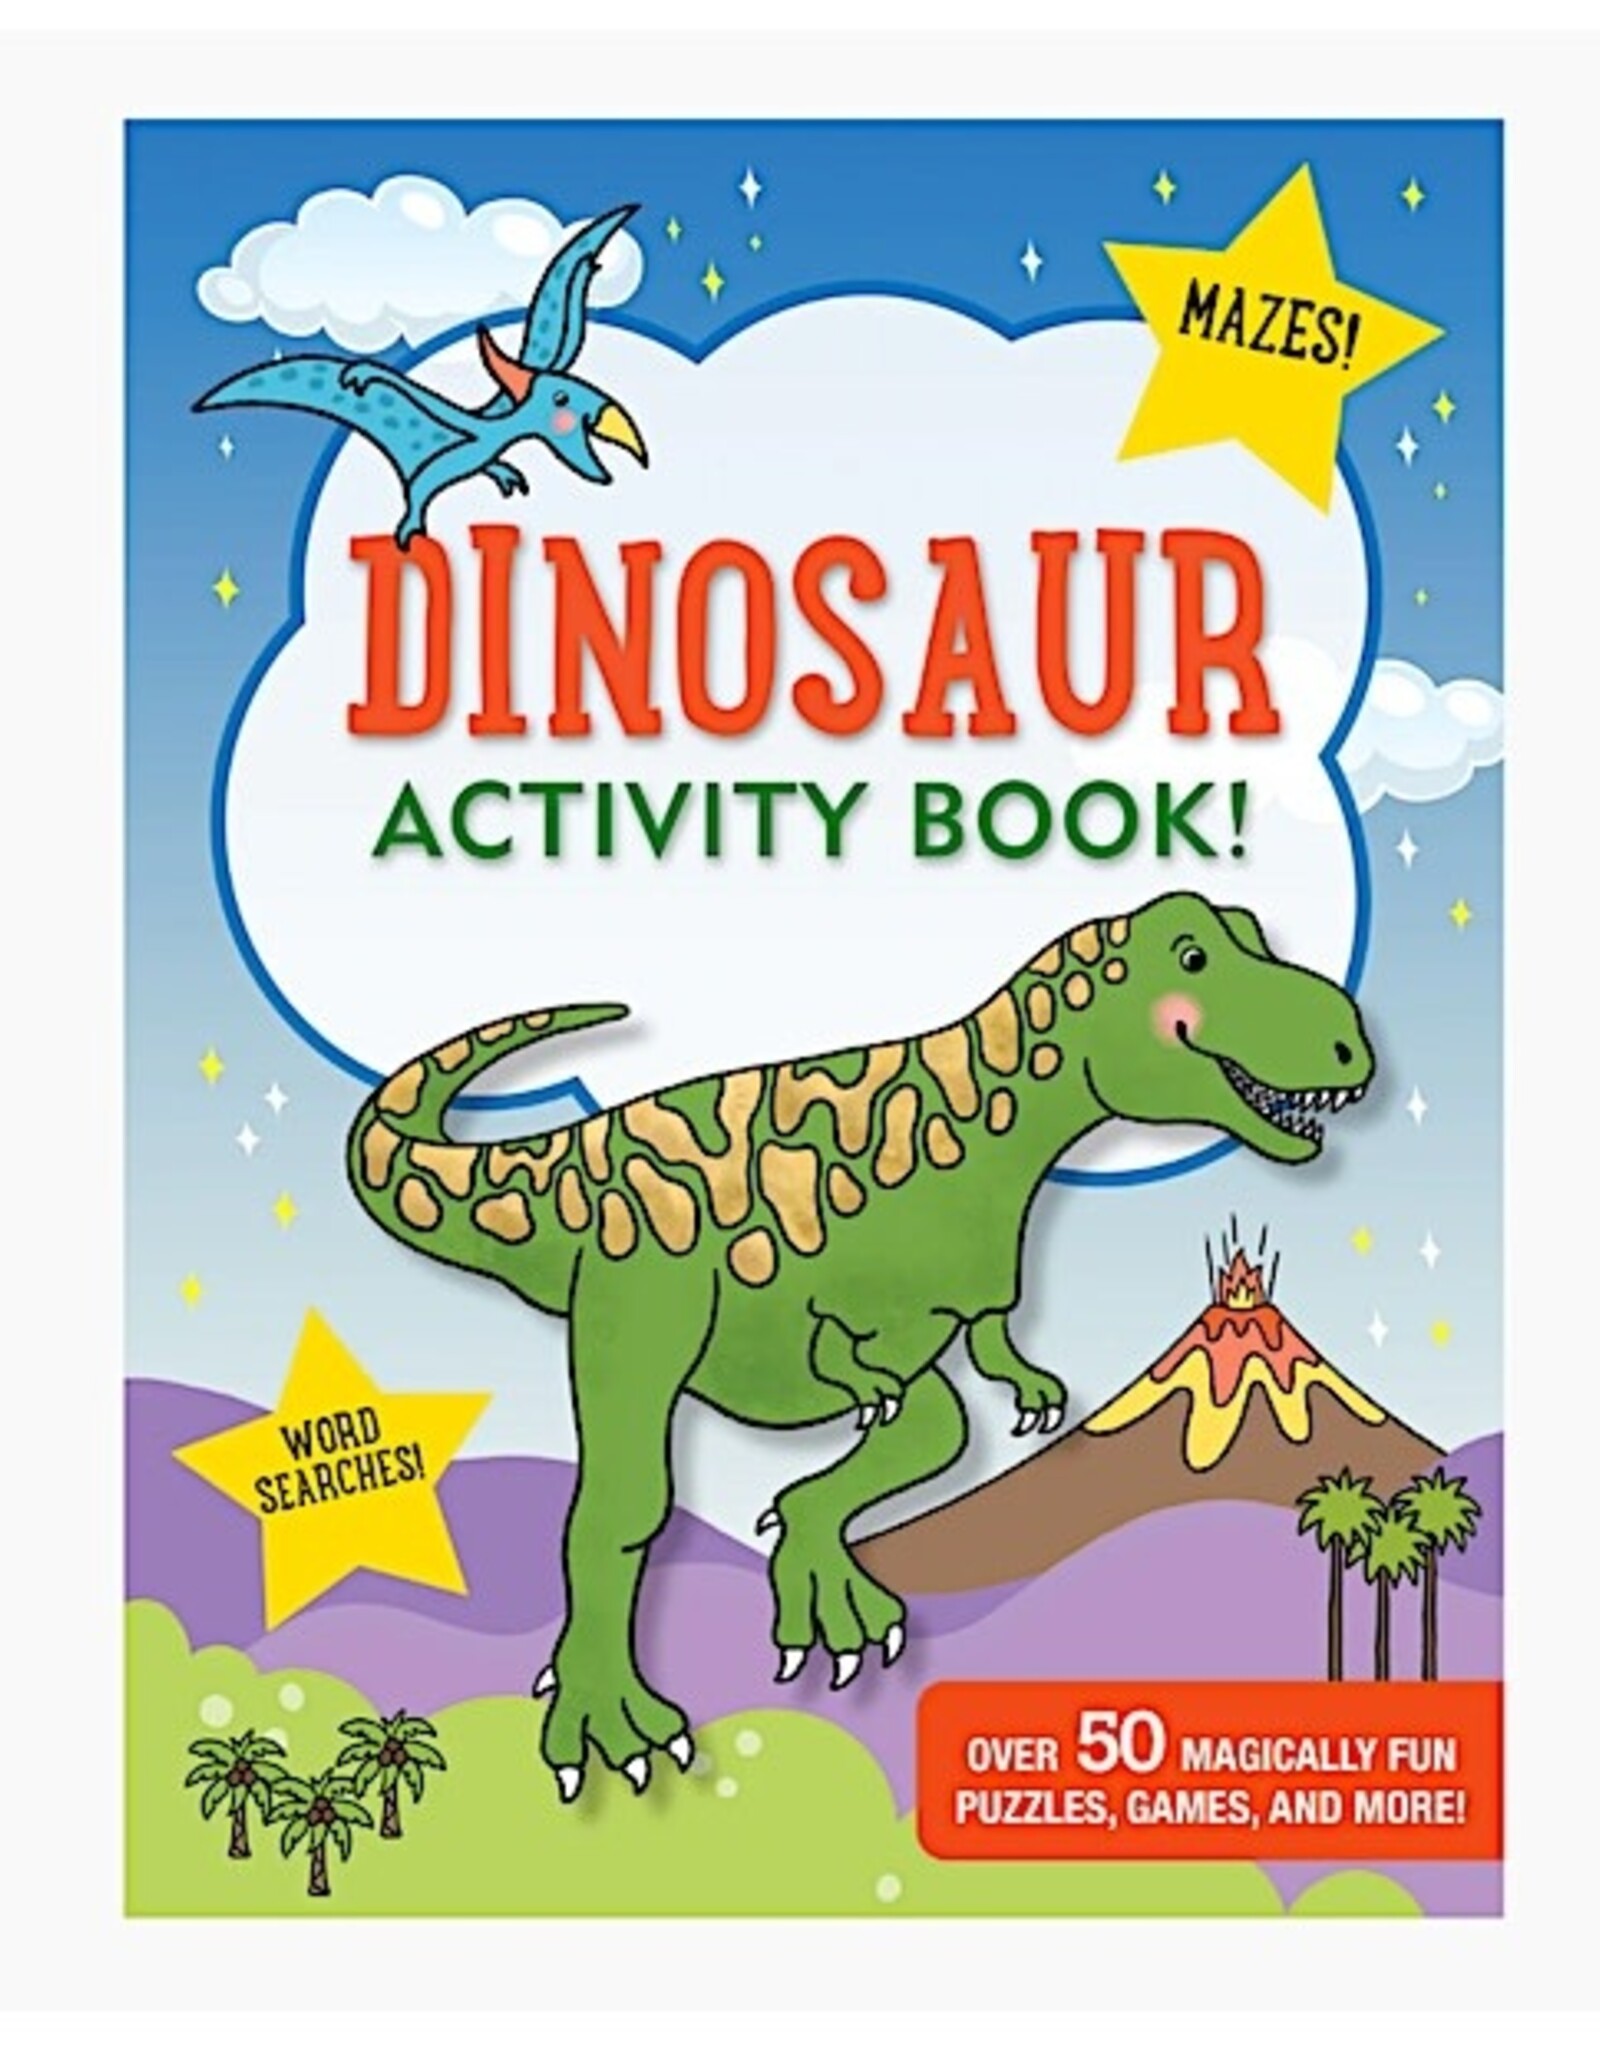 Dinosaur Activity Book!